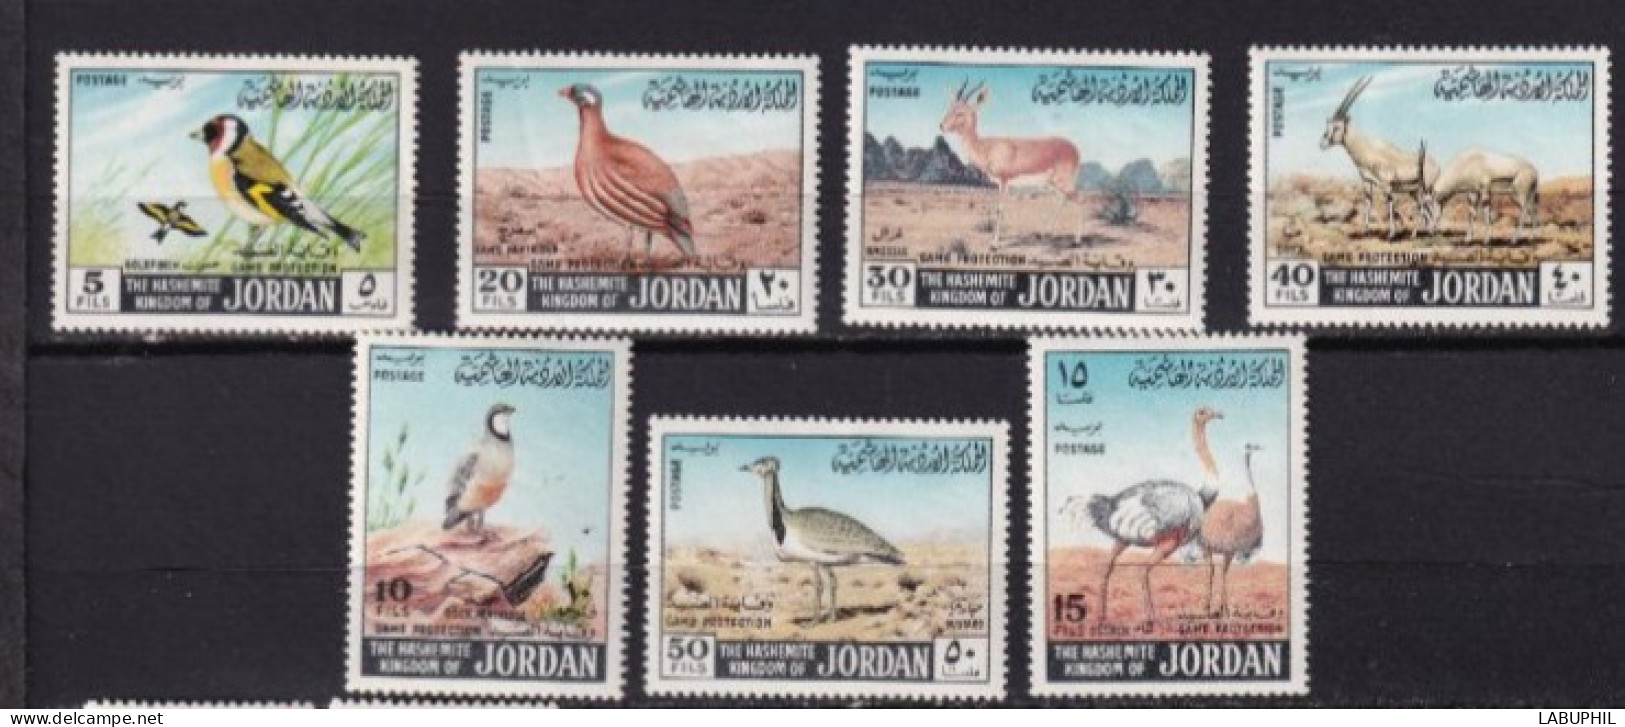 JORDANIE MNH ** 1968 Faune Oiseaux Birds Mamiferes - Jordanie